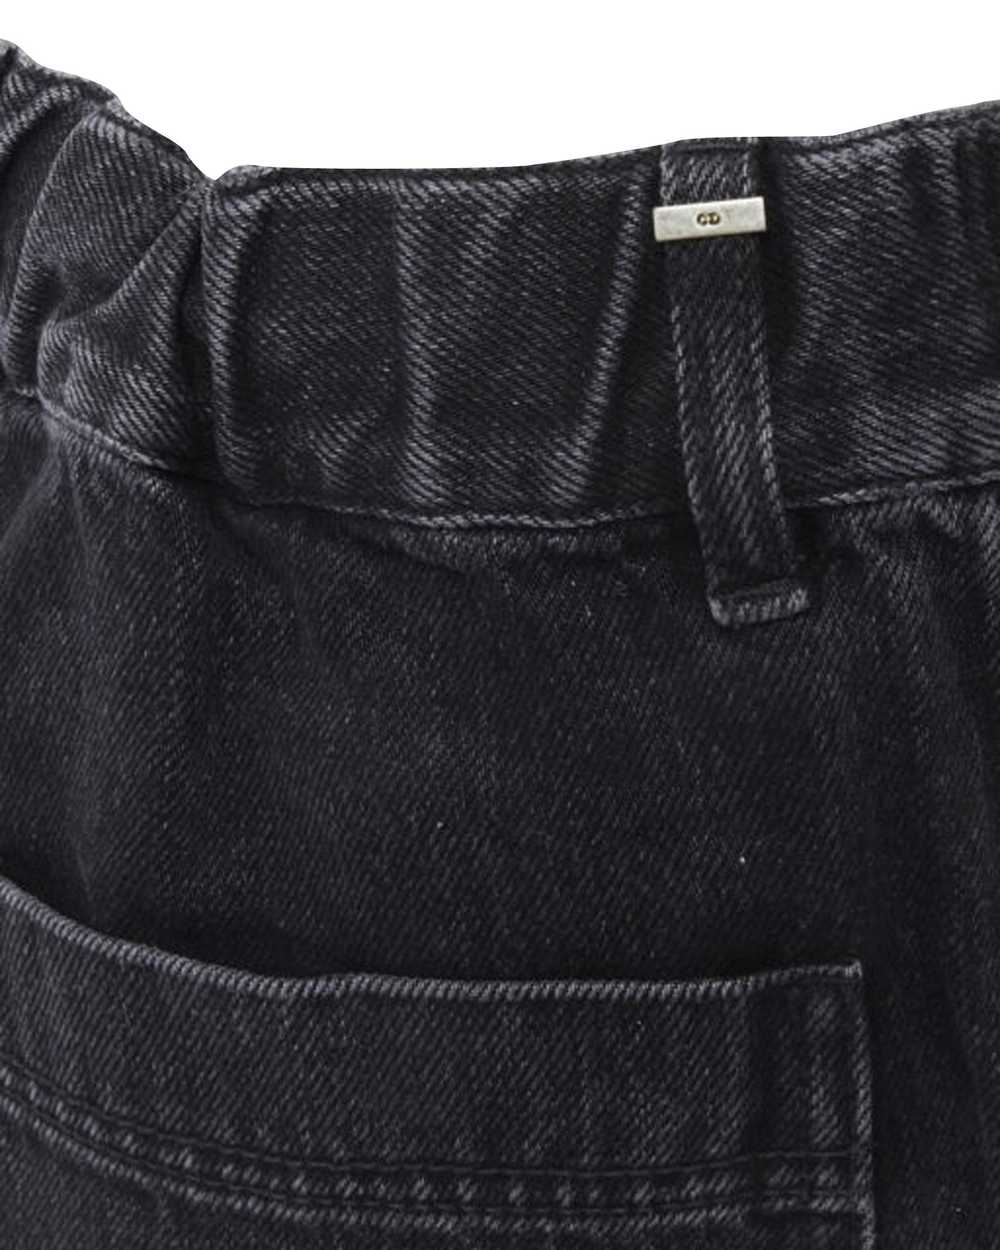 Product Details Dior Denim Cargo Shorts - image 2